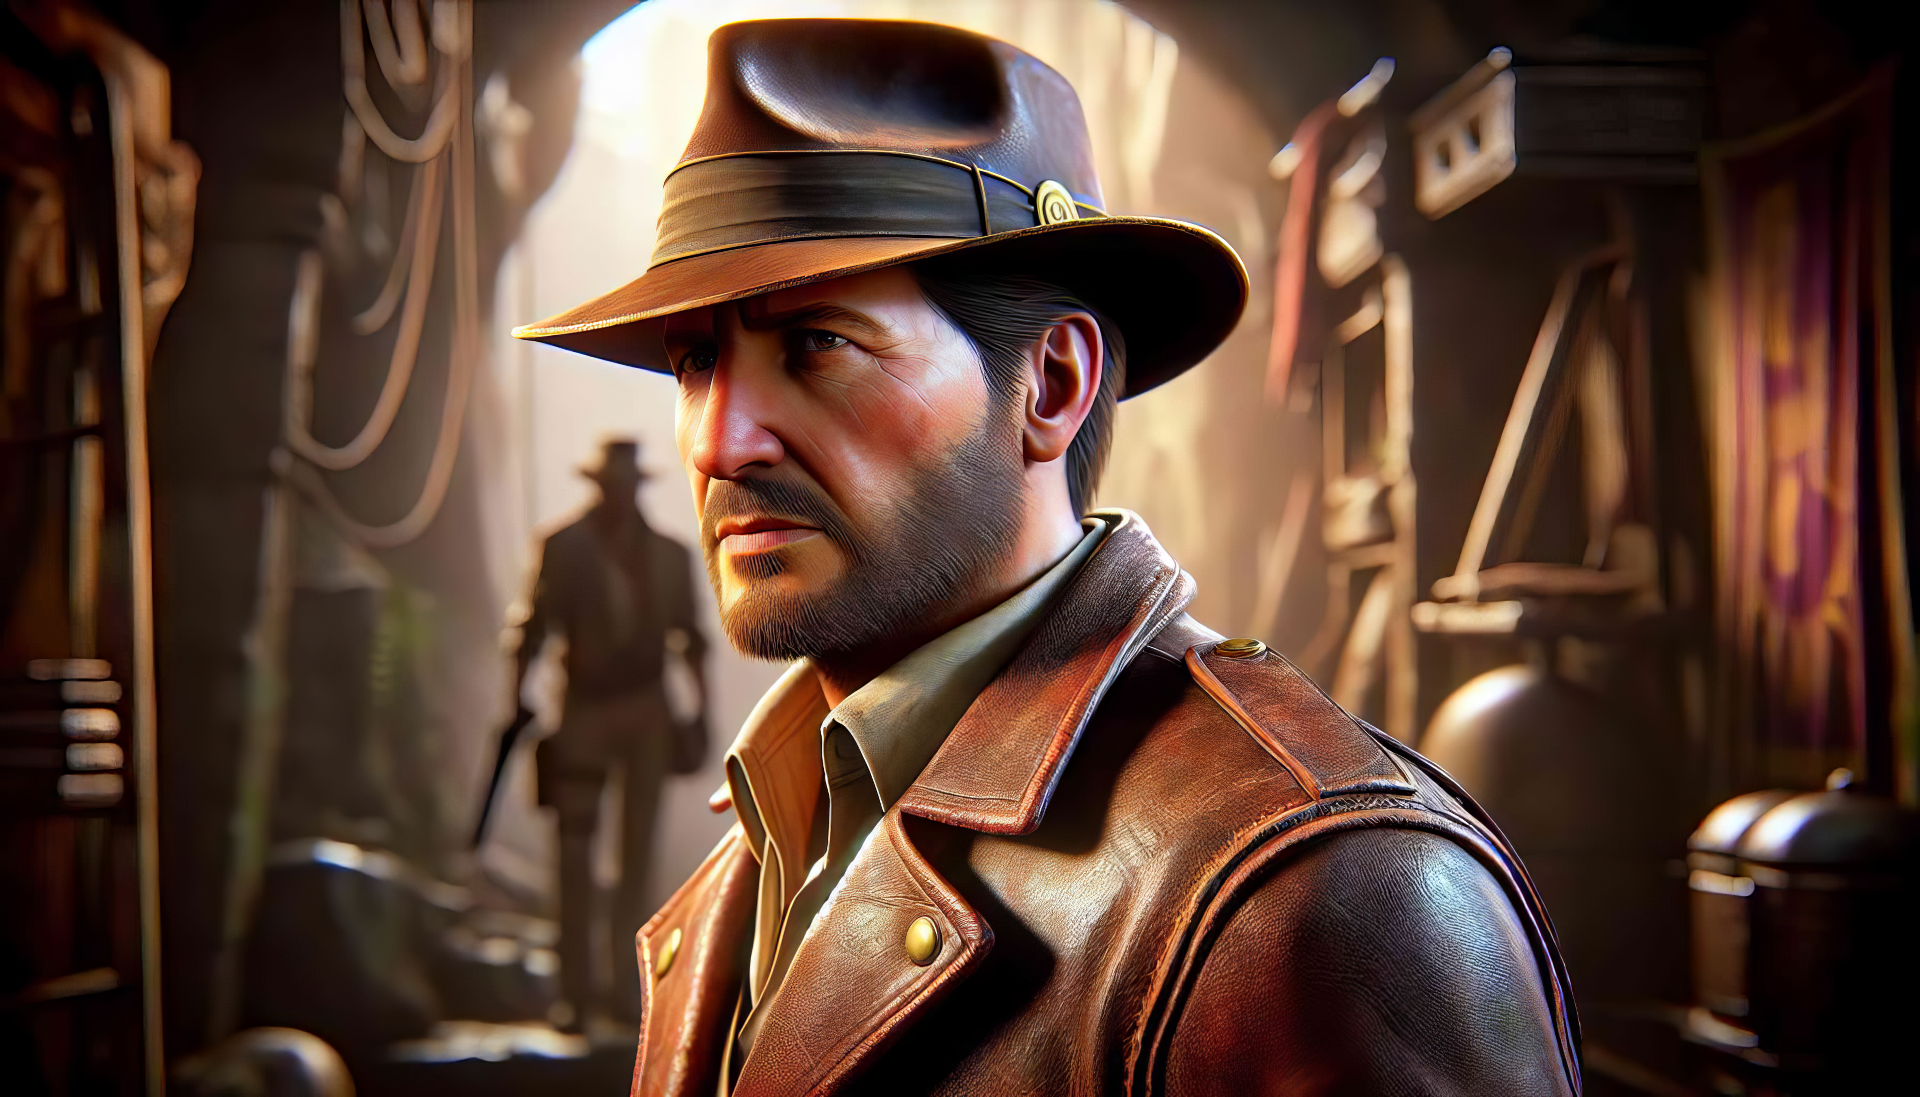 Indiana Jones and the Great Circle może zawitać także na PlayStation 5 - plotki